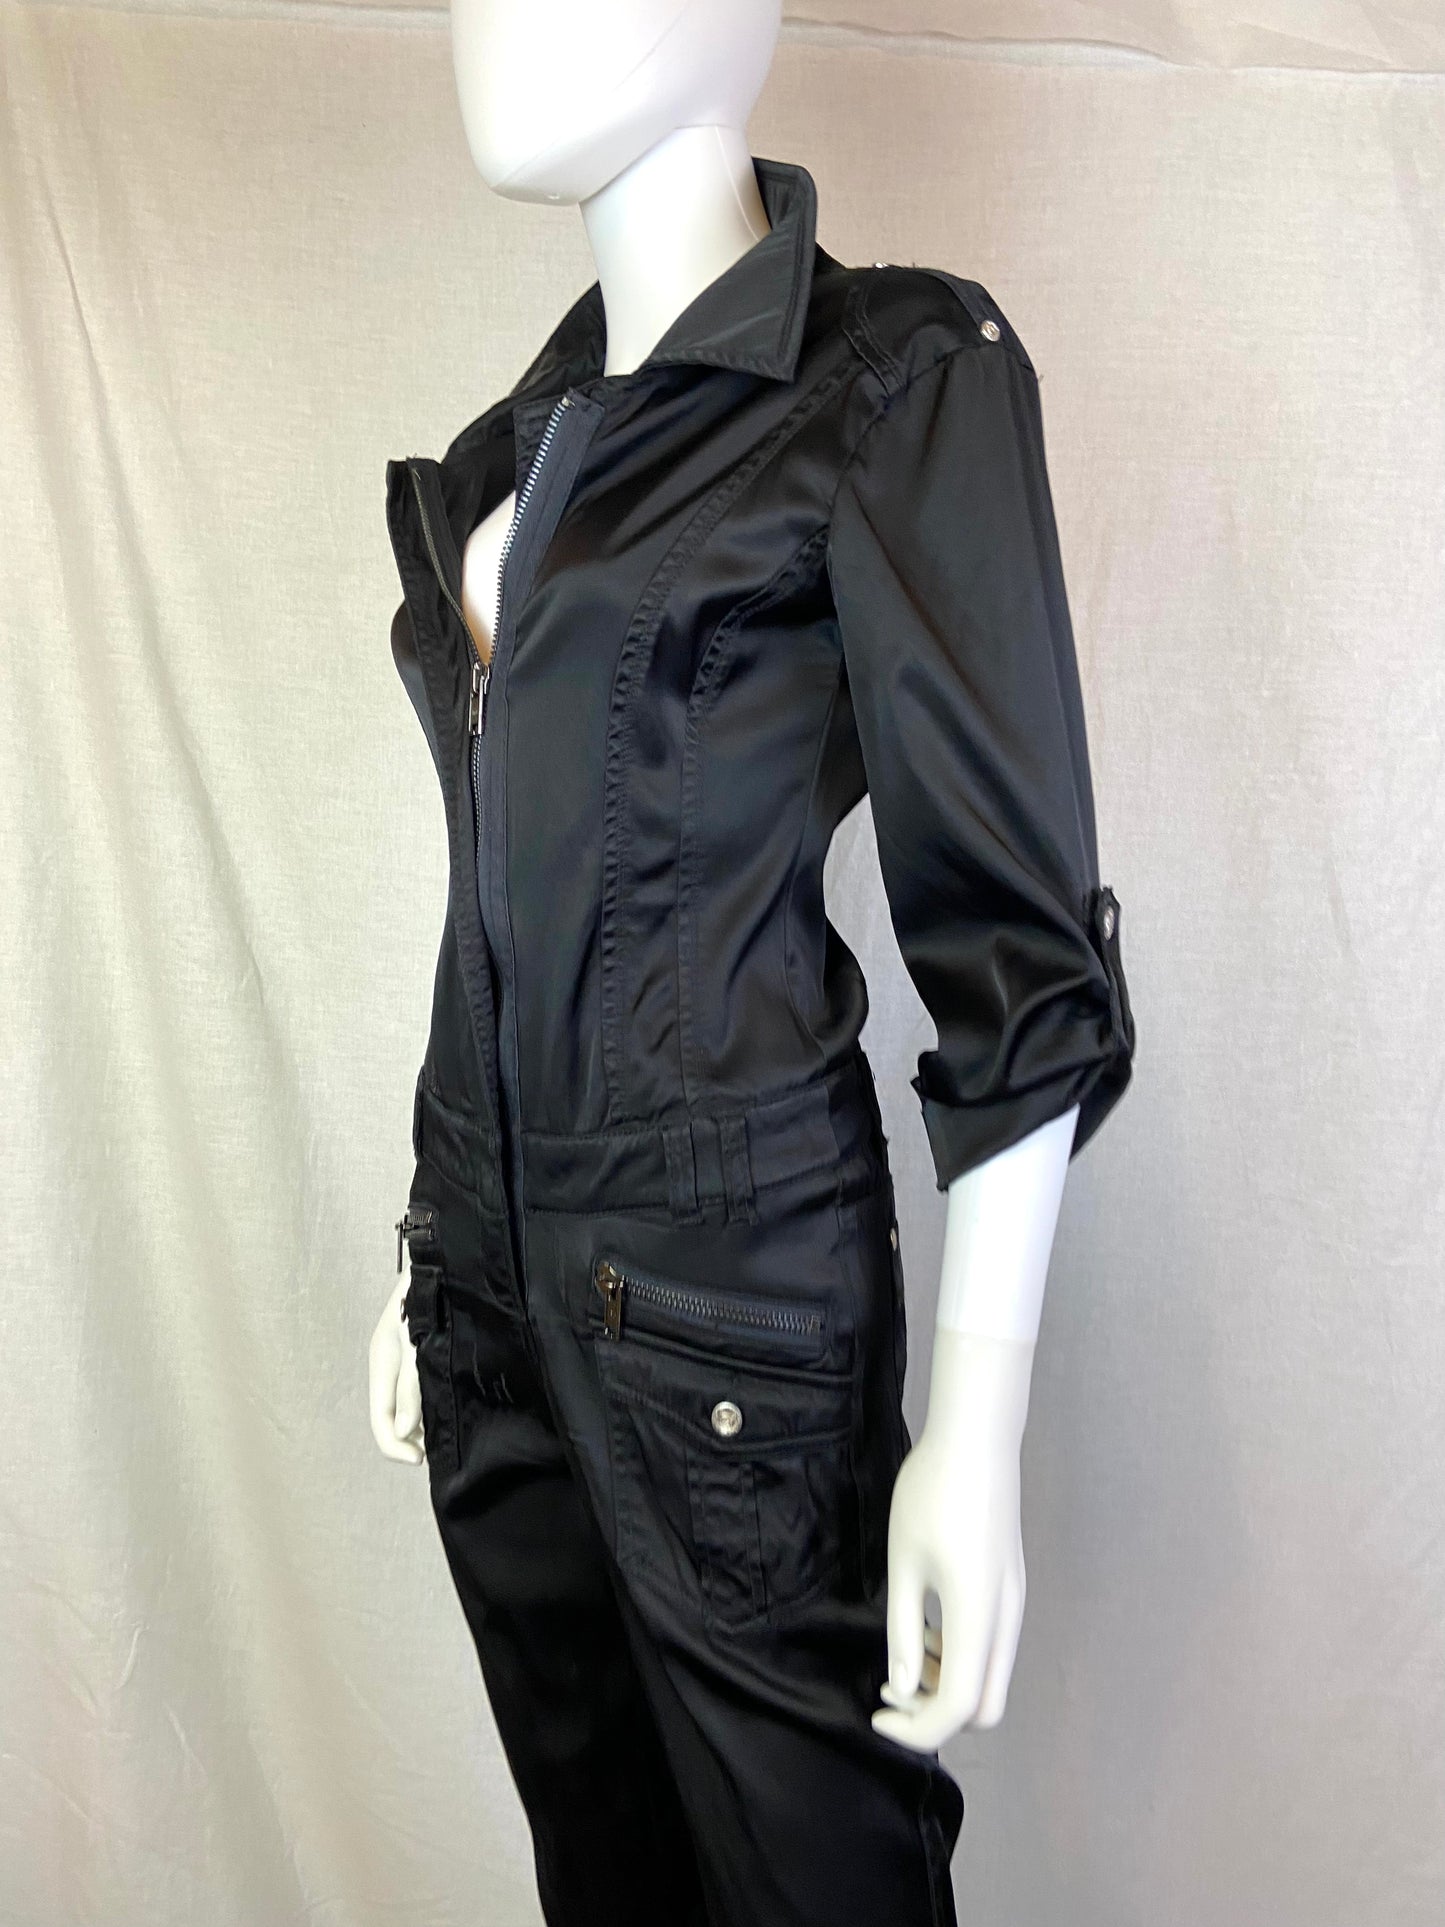 BEBE Premium Black Satin Zipper Jumpsuit